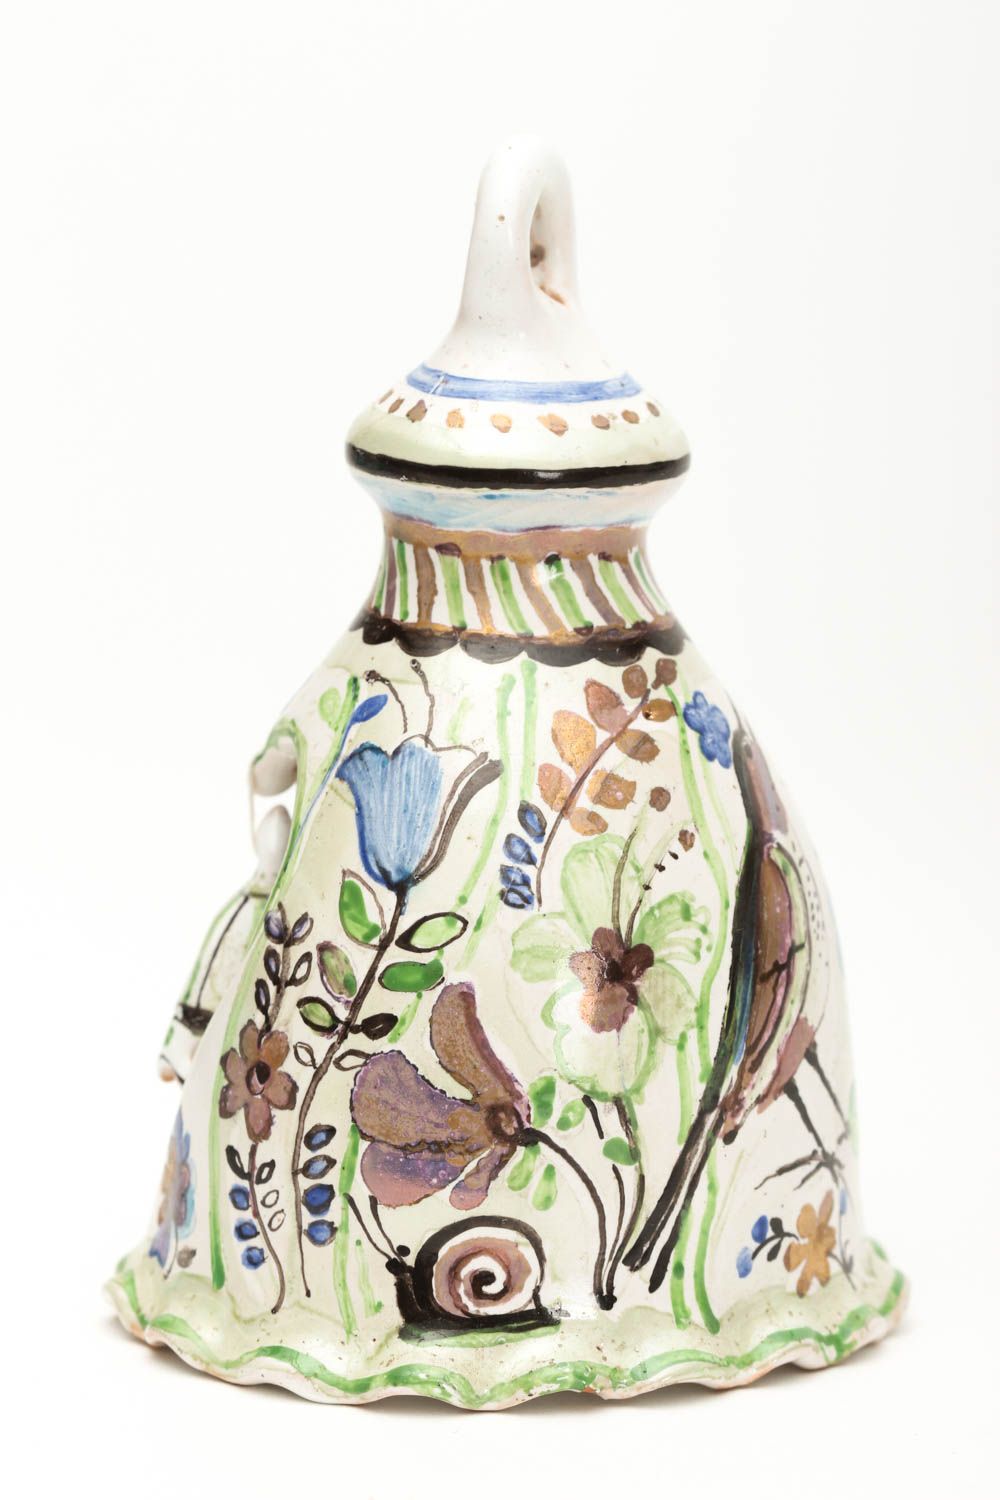 Souvenir handmade ceramic bell home design pottery works decorative use only photo 2